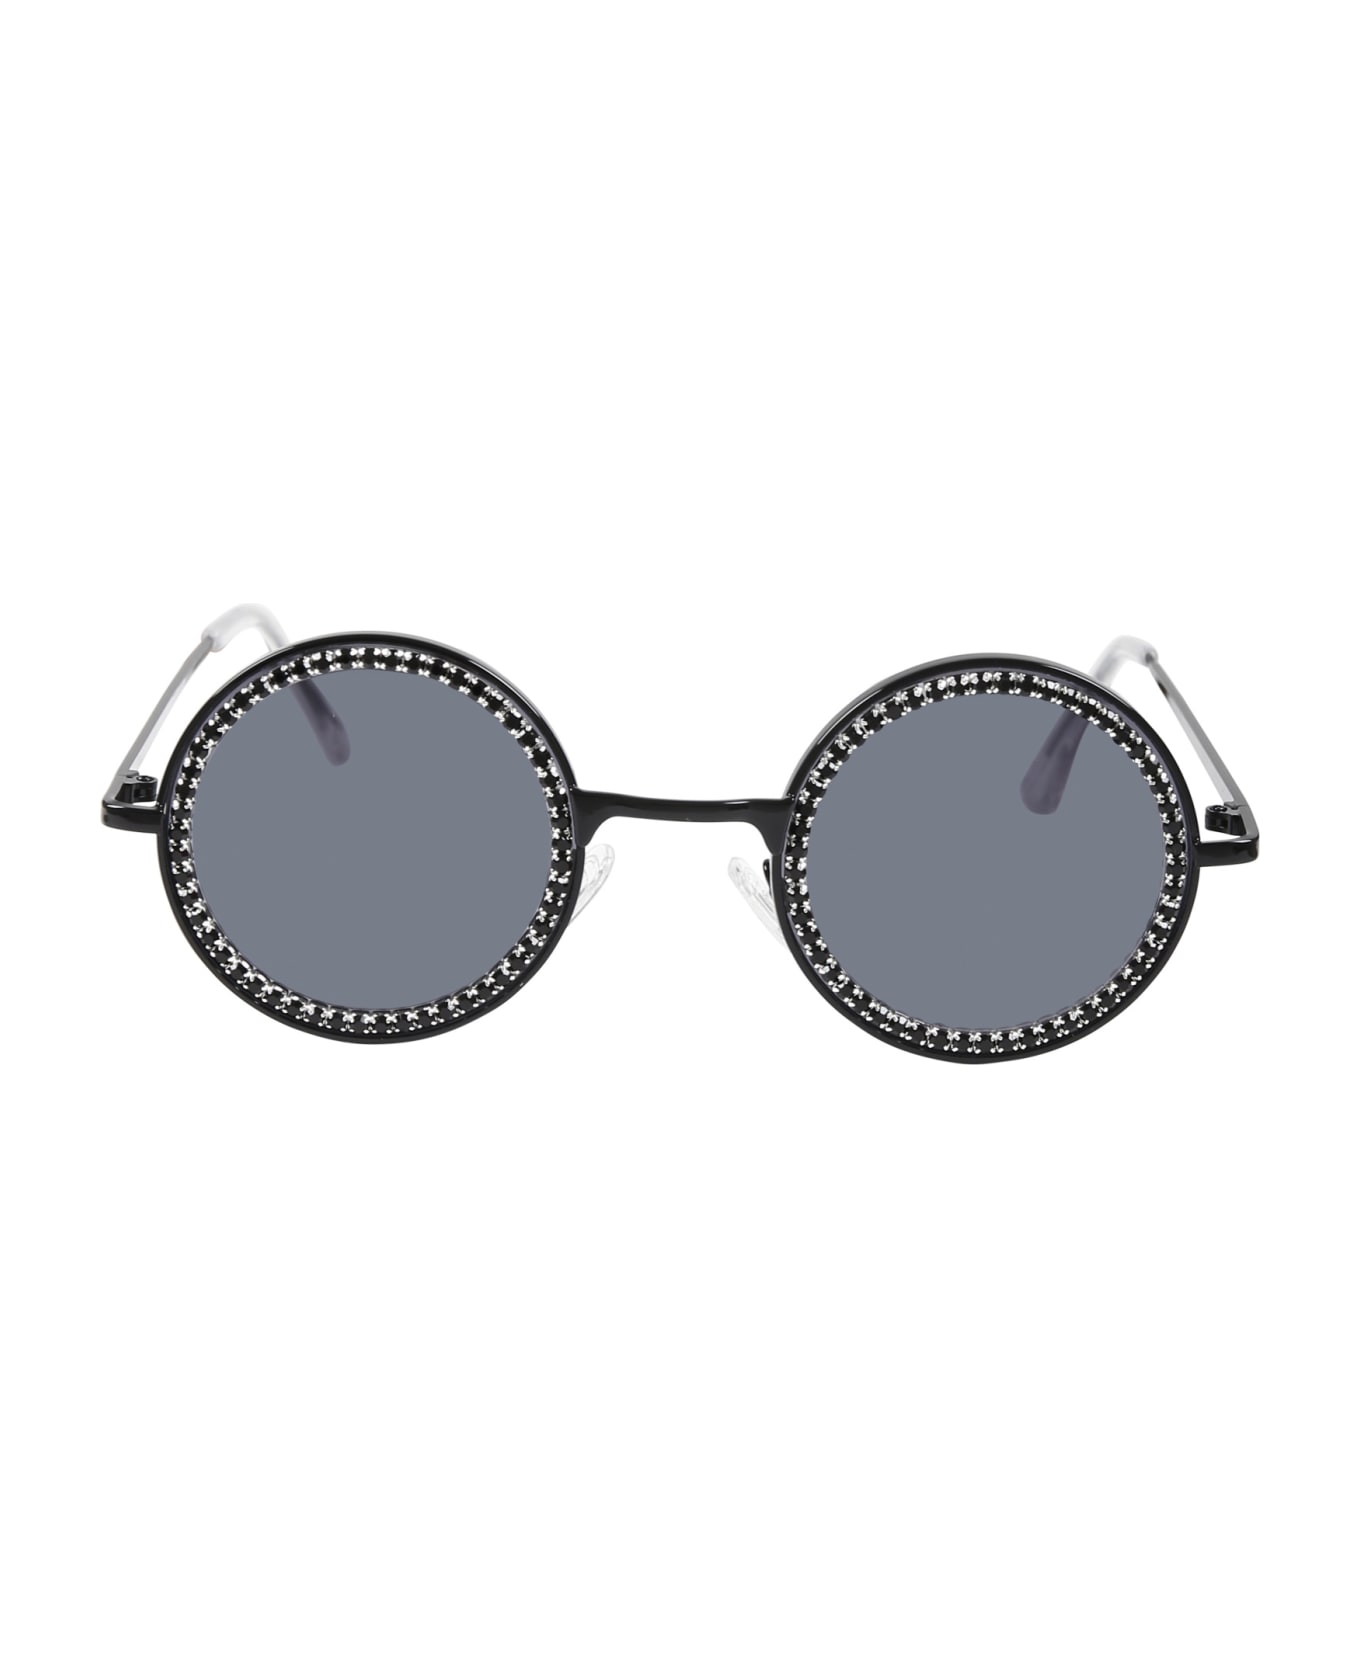 Monnalisa Black Glasses For Girl With Rhinestones - Black